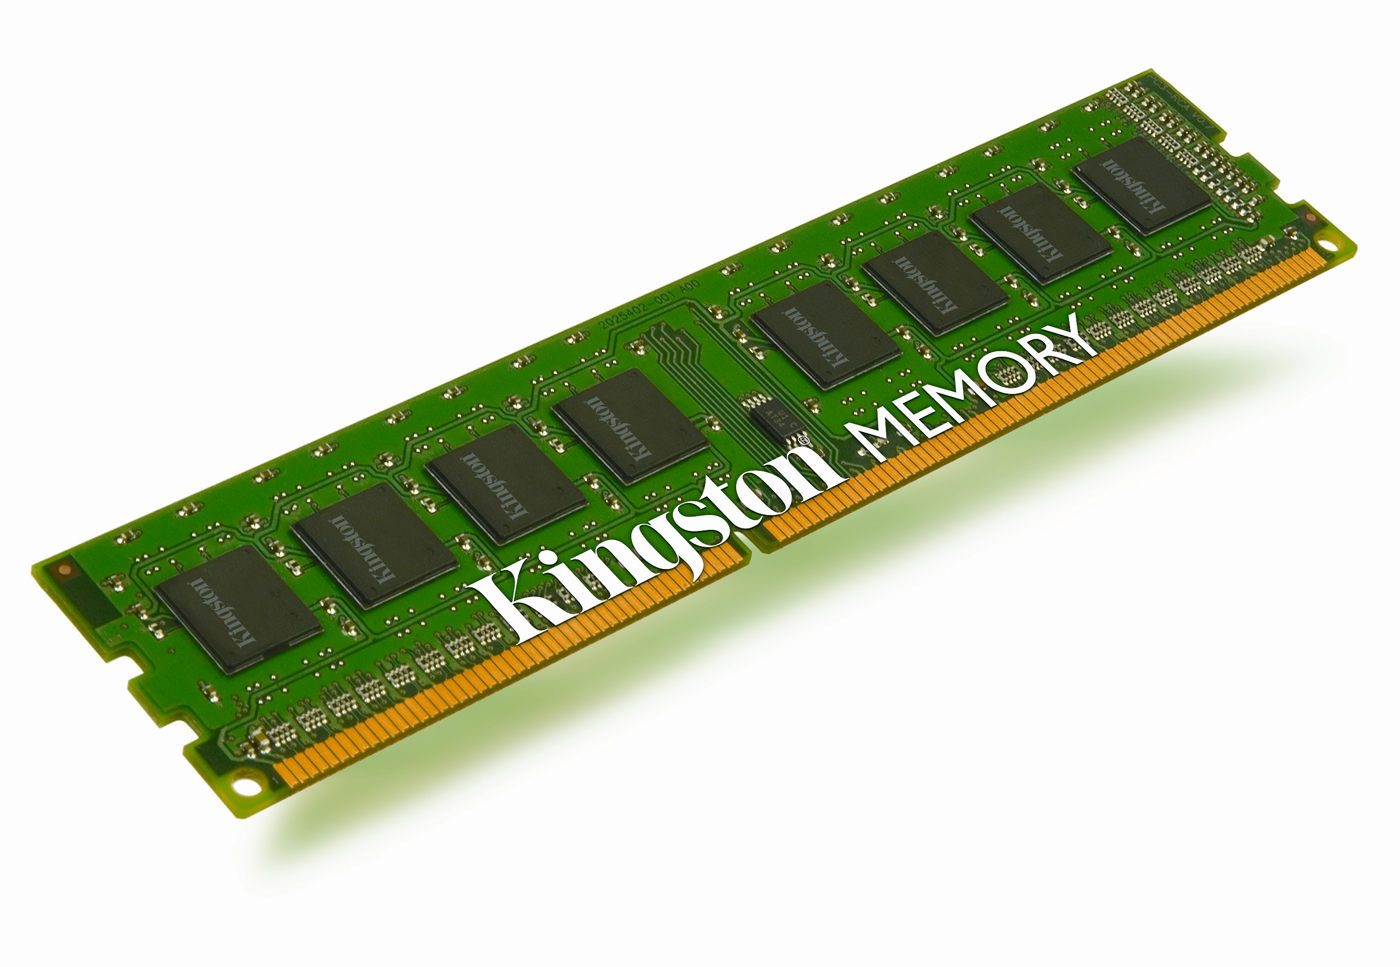 KINGSTON DDR4 4GB 2133MHz DDR4 Non-ECC CL15 DIMM SR x8 KVR21N15S8/4